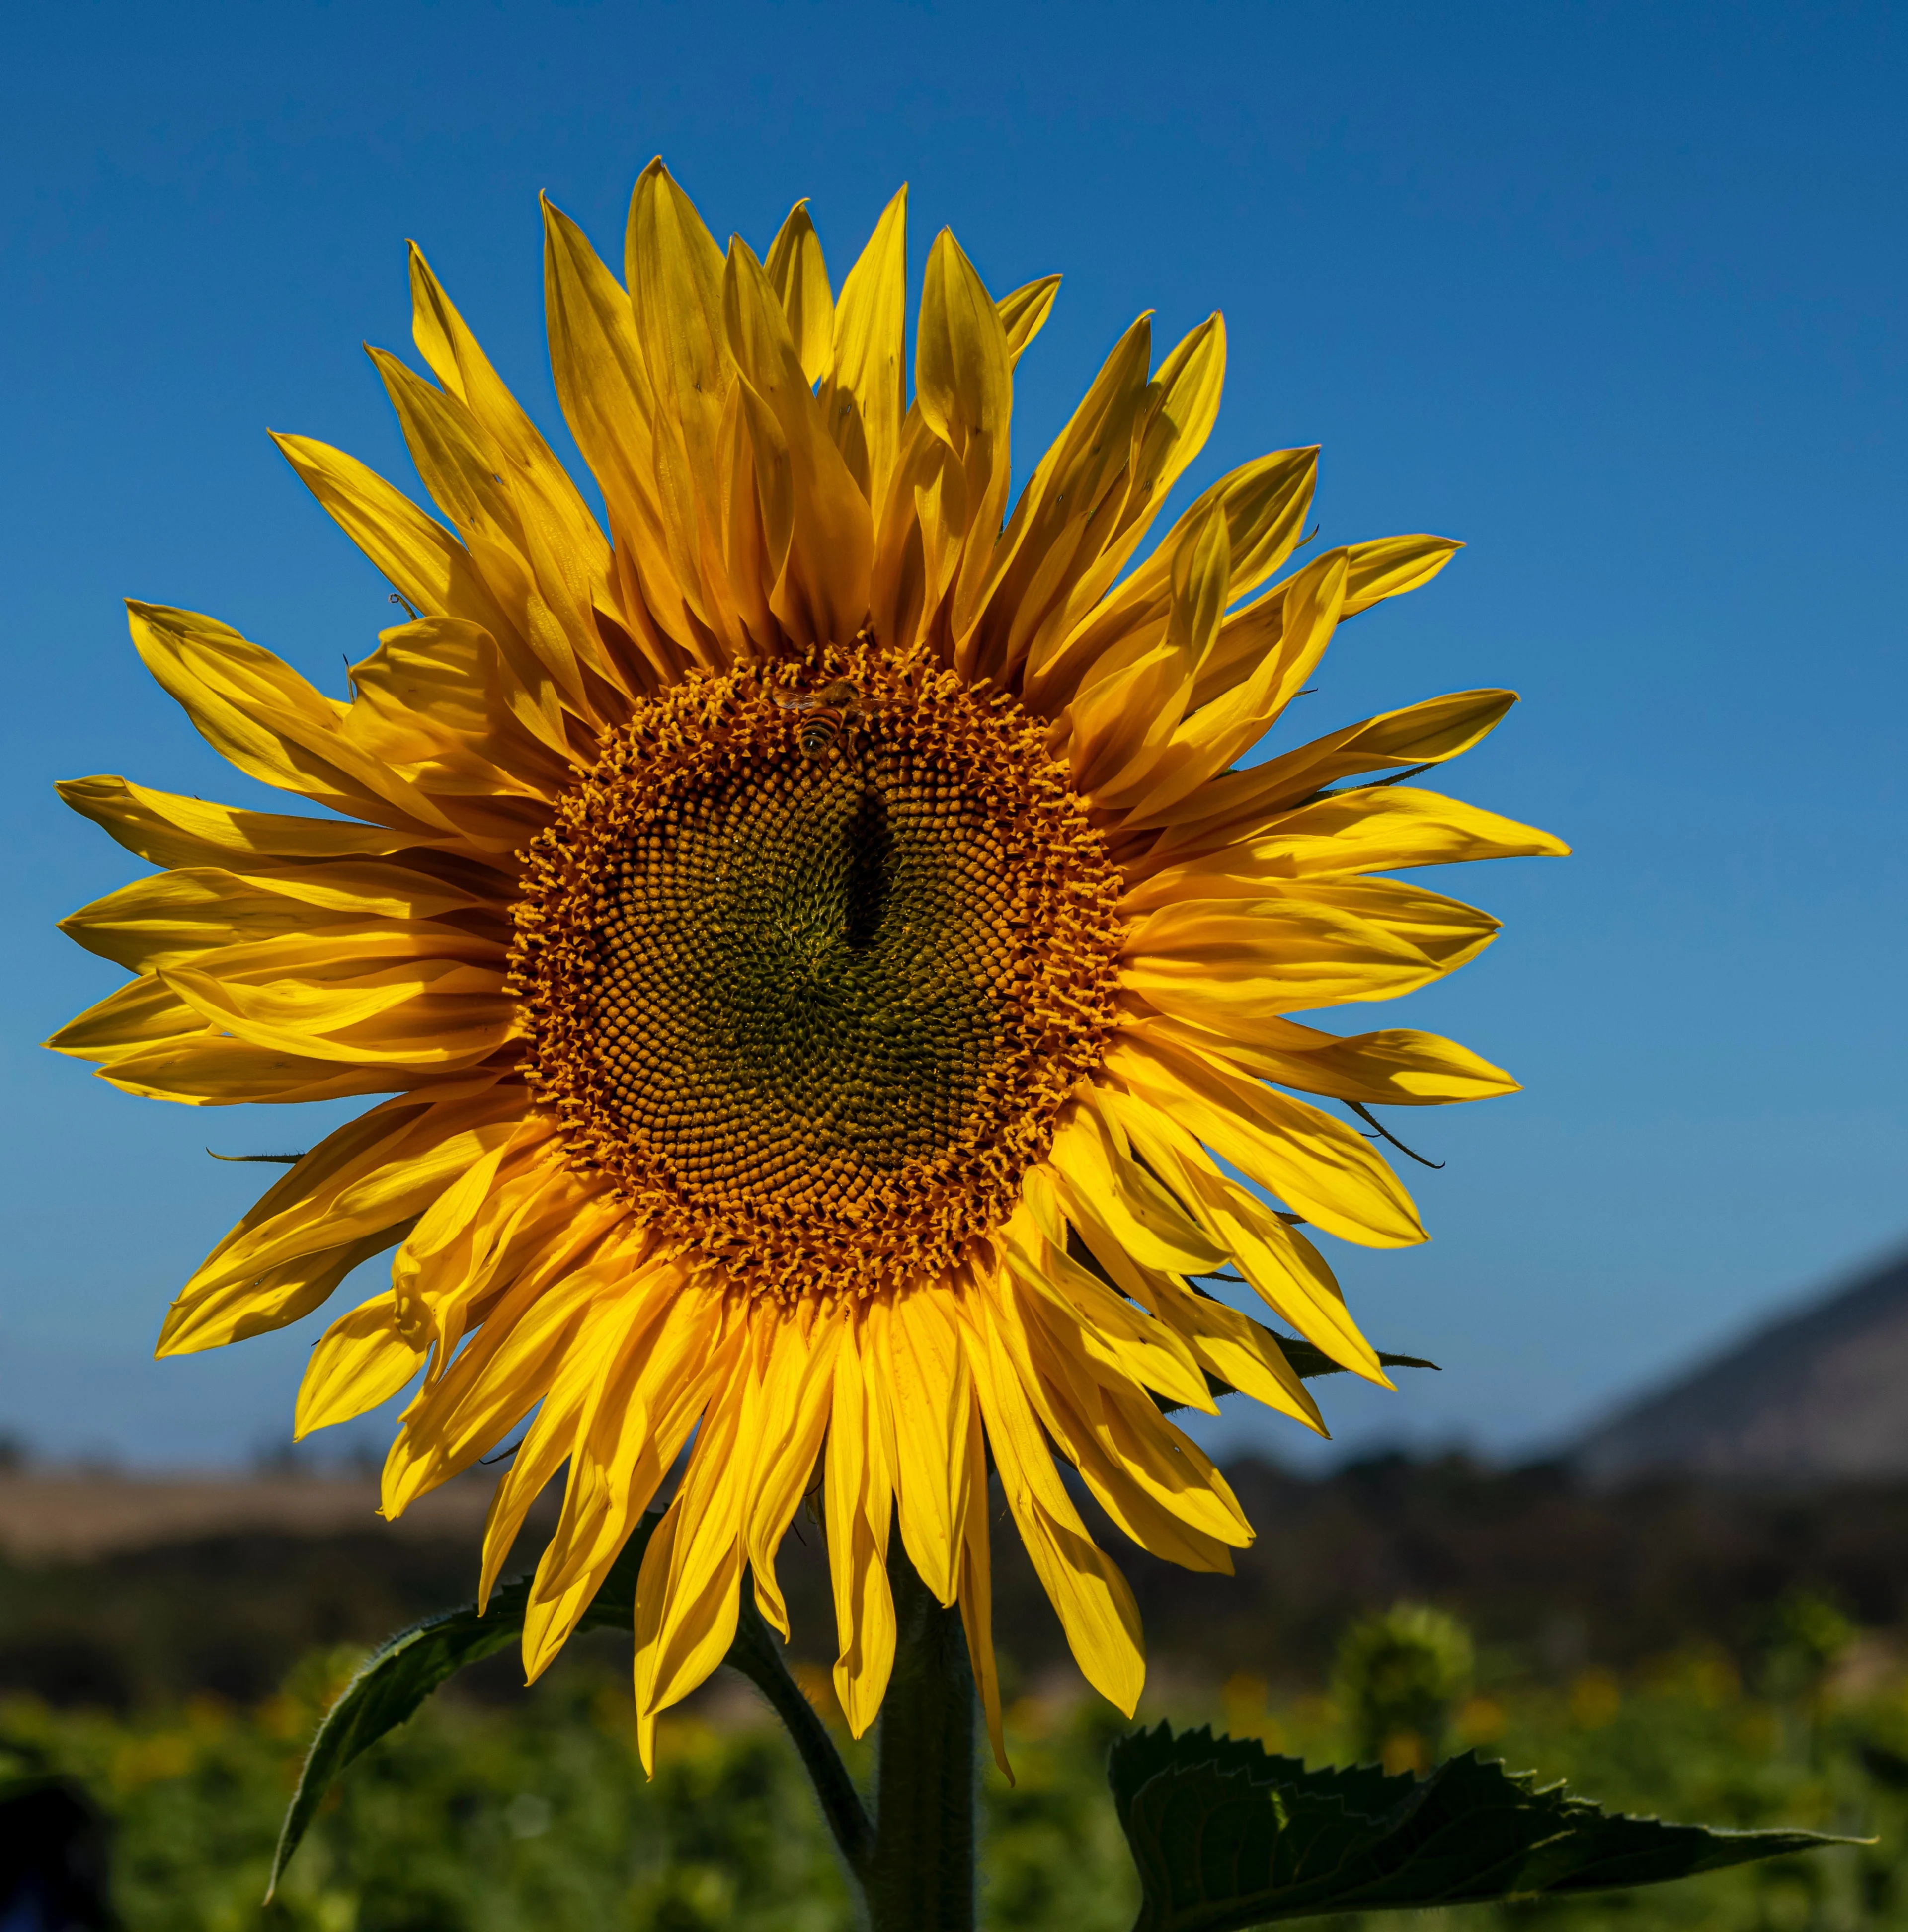 Sunflower at Pick Your Own Sunflowers, Dunnstown near Ballarat